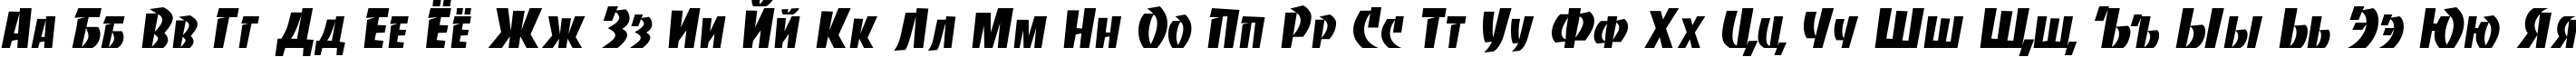 Пример написания русского алфавита шрифтом BancoDi